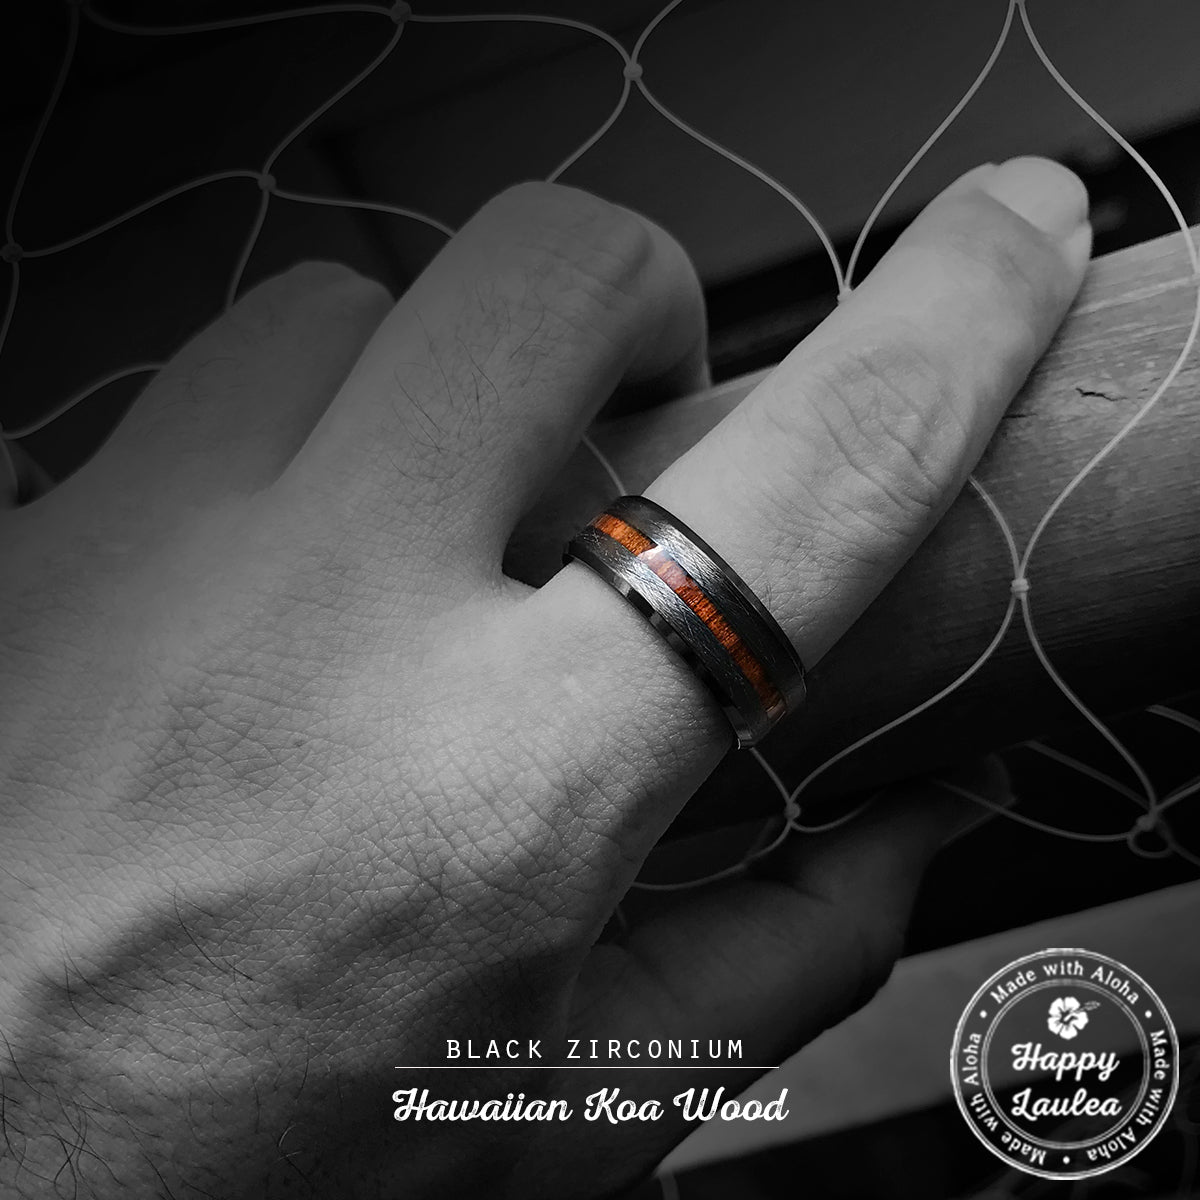 Black Zirconium Cross Brushed Beveled Edge Ring with Hawaiian Koa Wood Inlay - 8mm, Flat Shape, Comfort Fitment